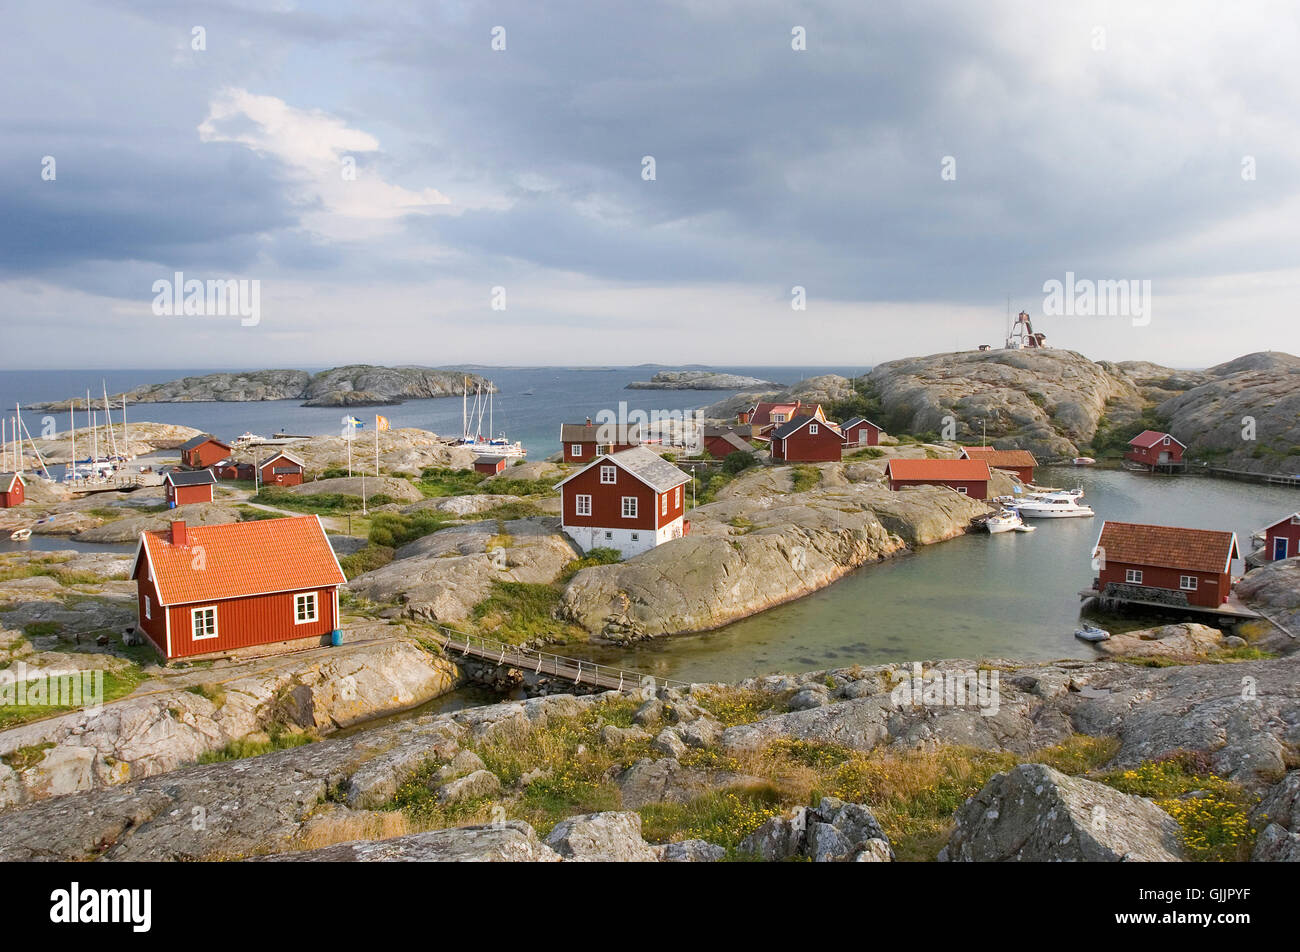 archipelago vaedderoe in sweden Stock Photo